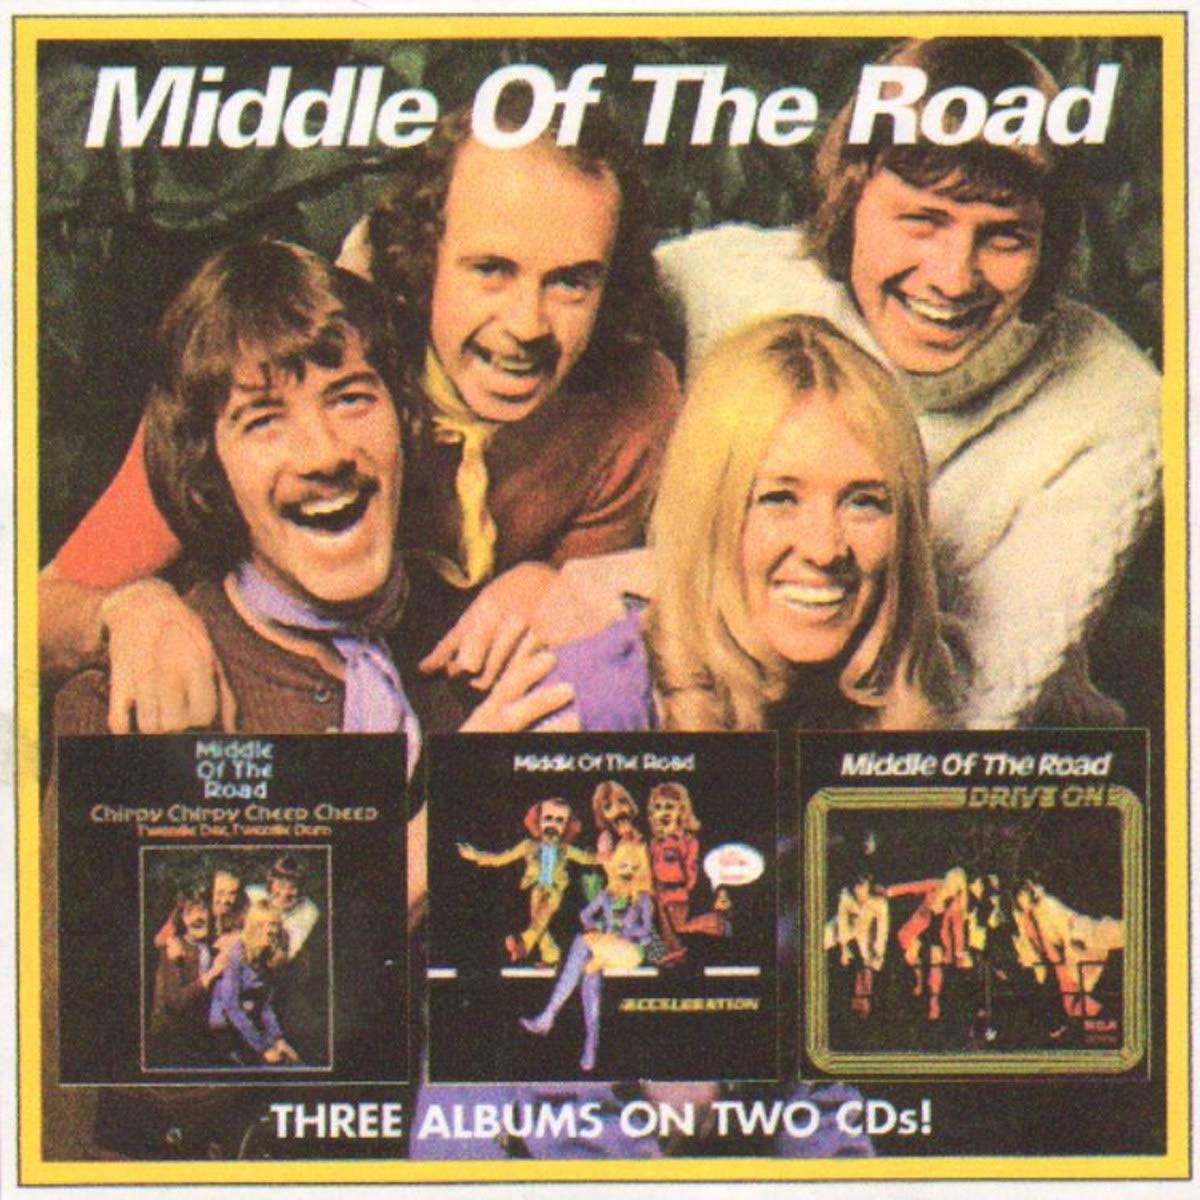 Middle of the road mp3. Middle of the Road 1971. Middle of the Road - Chirpy Chirpy cheep cheep (1971). Middle of the Road дискография. Middle of the Road плакат.